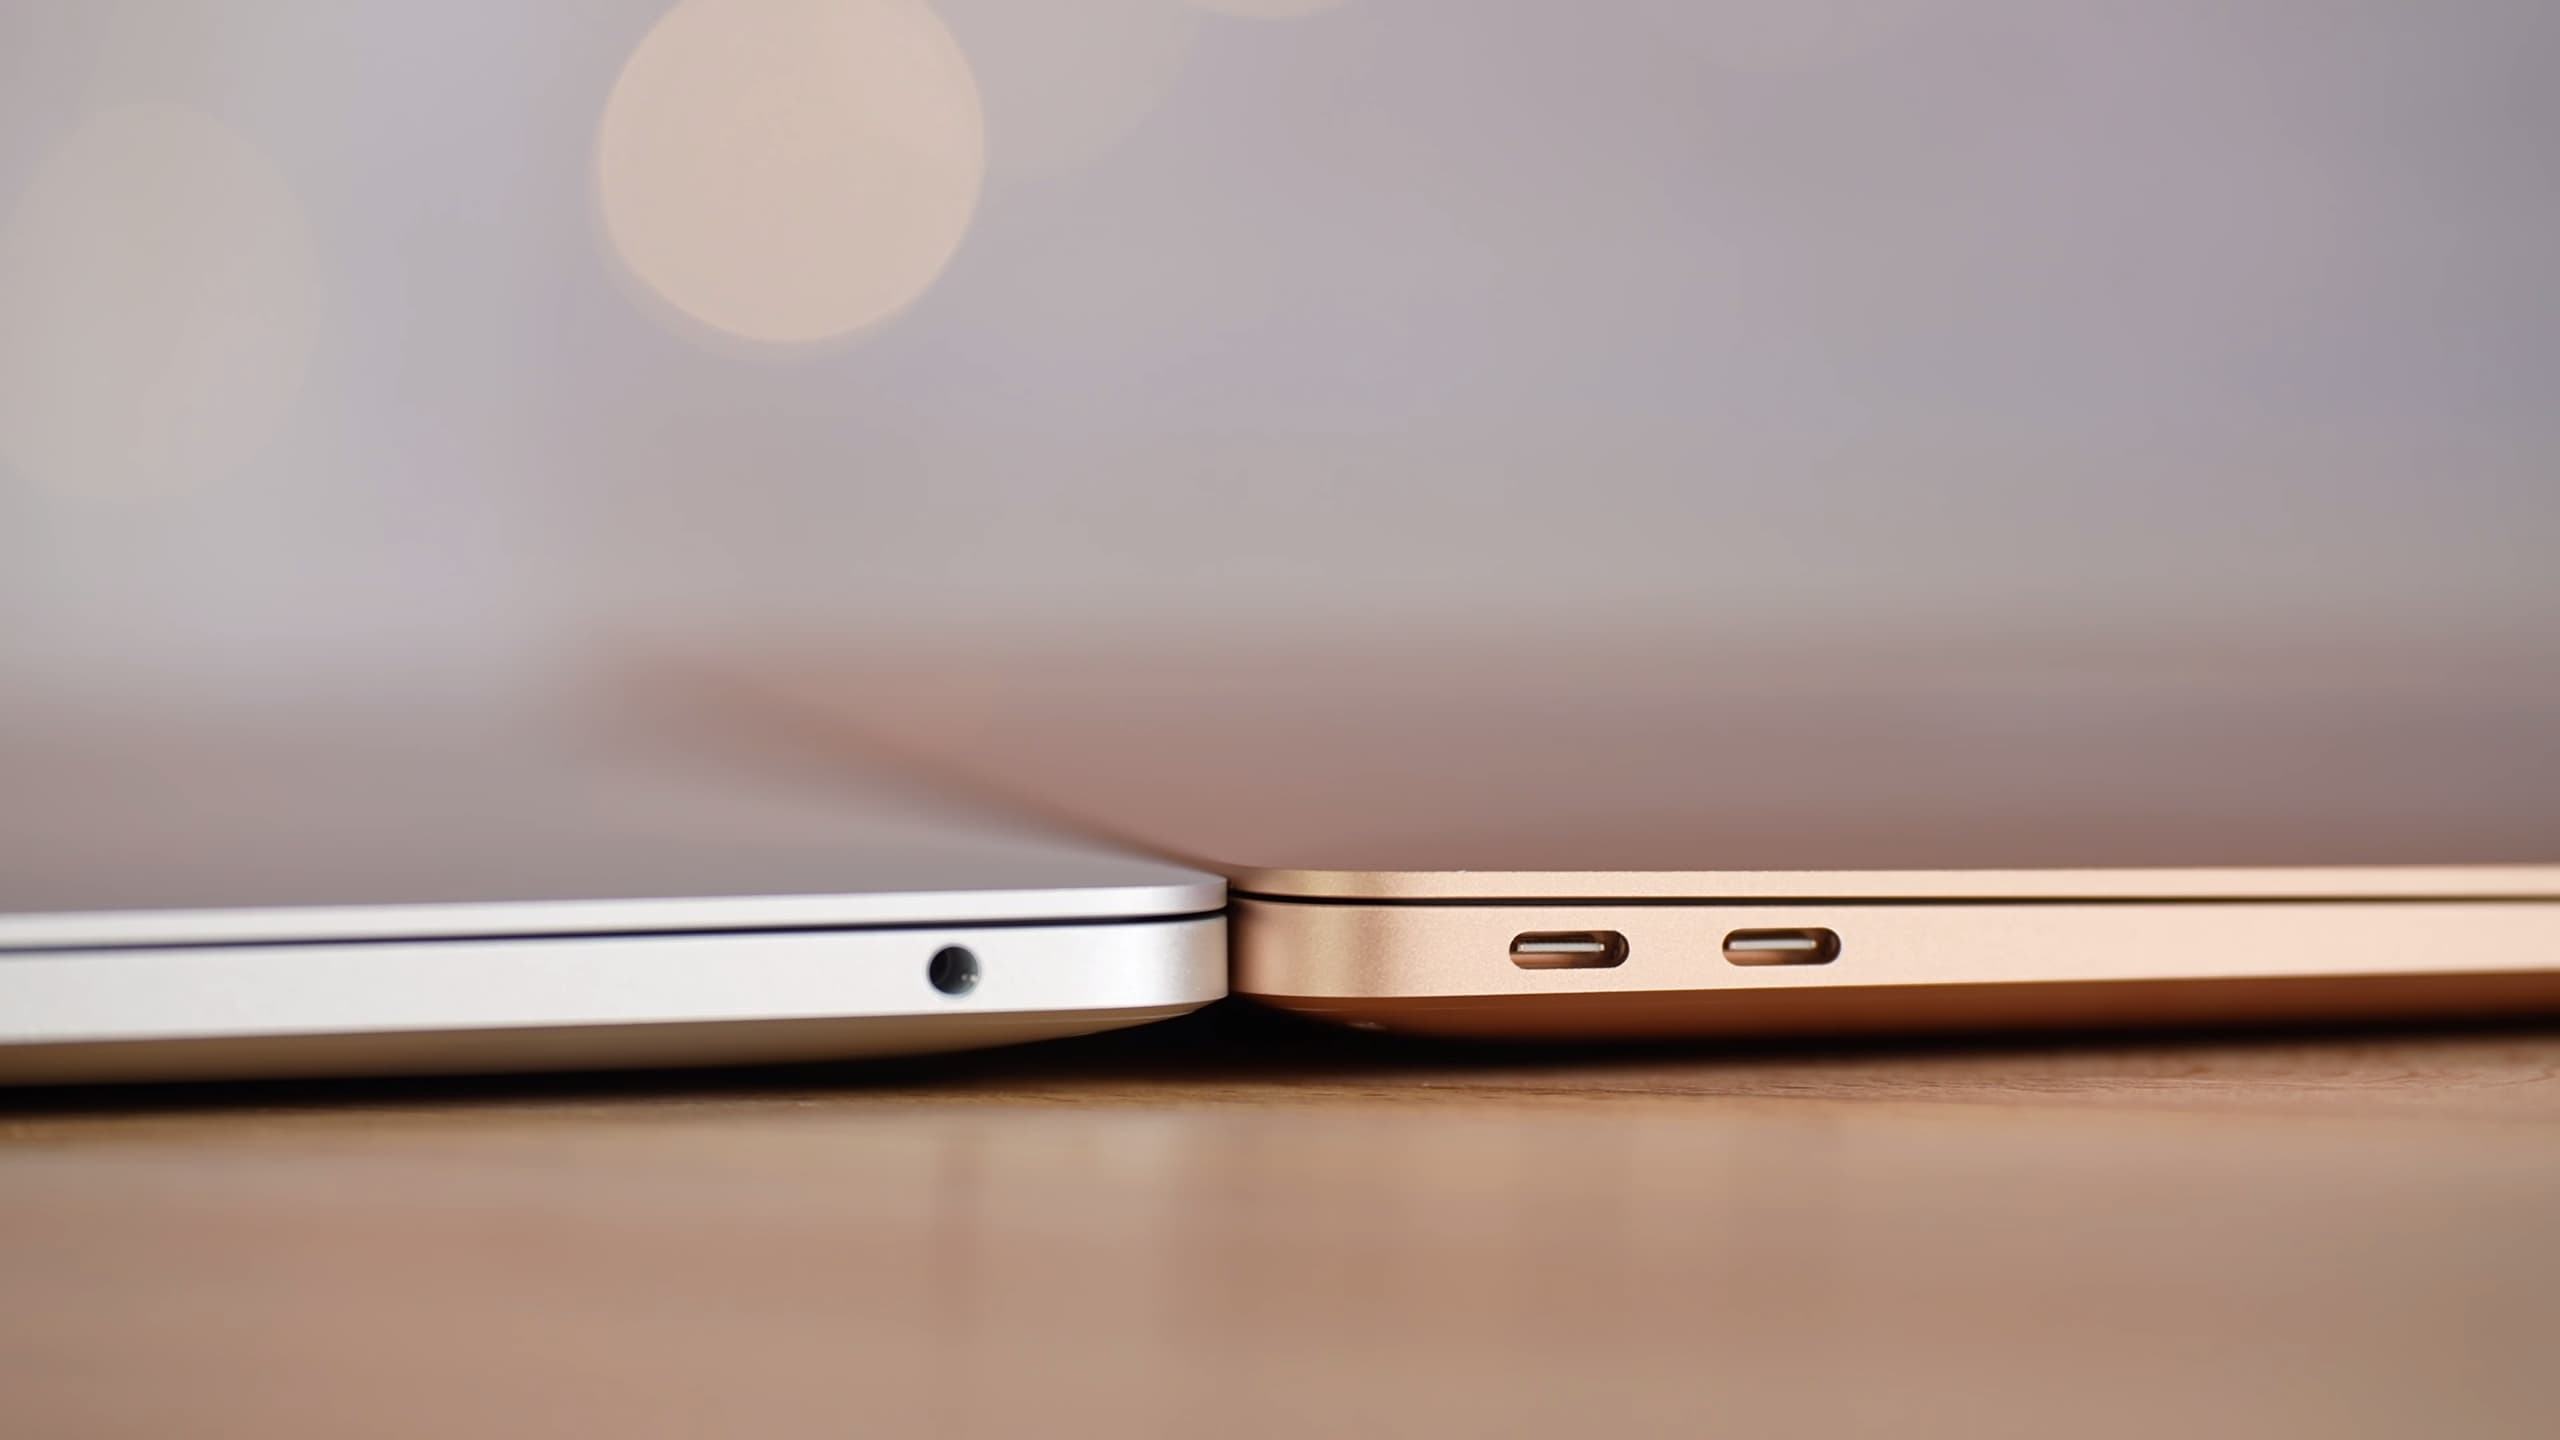 apple m1 macbook pro vs macbook air comparison 2